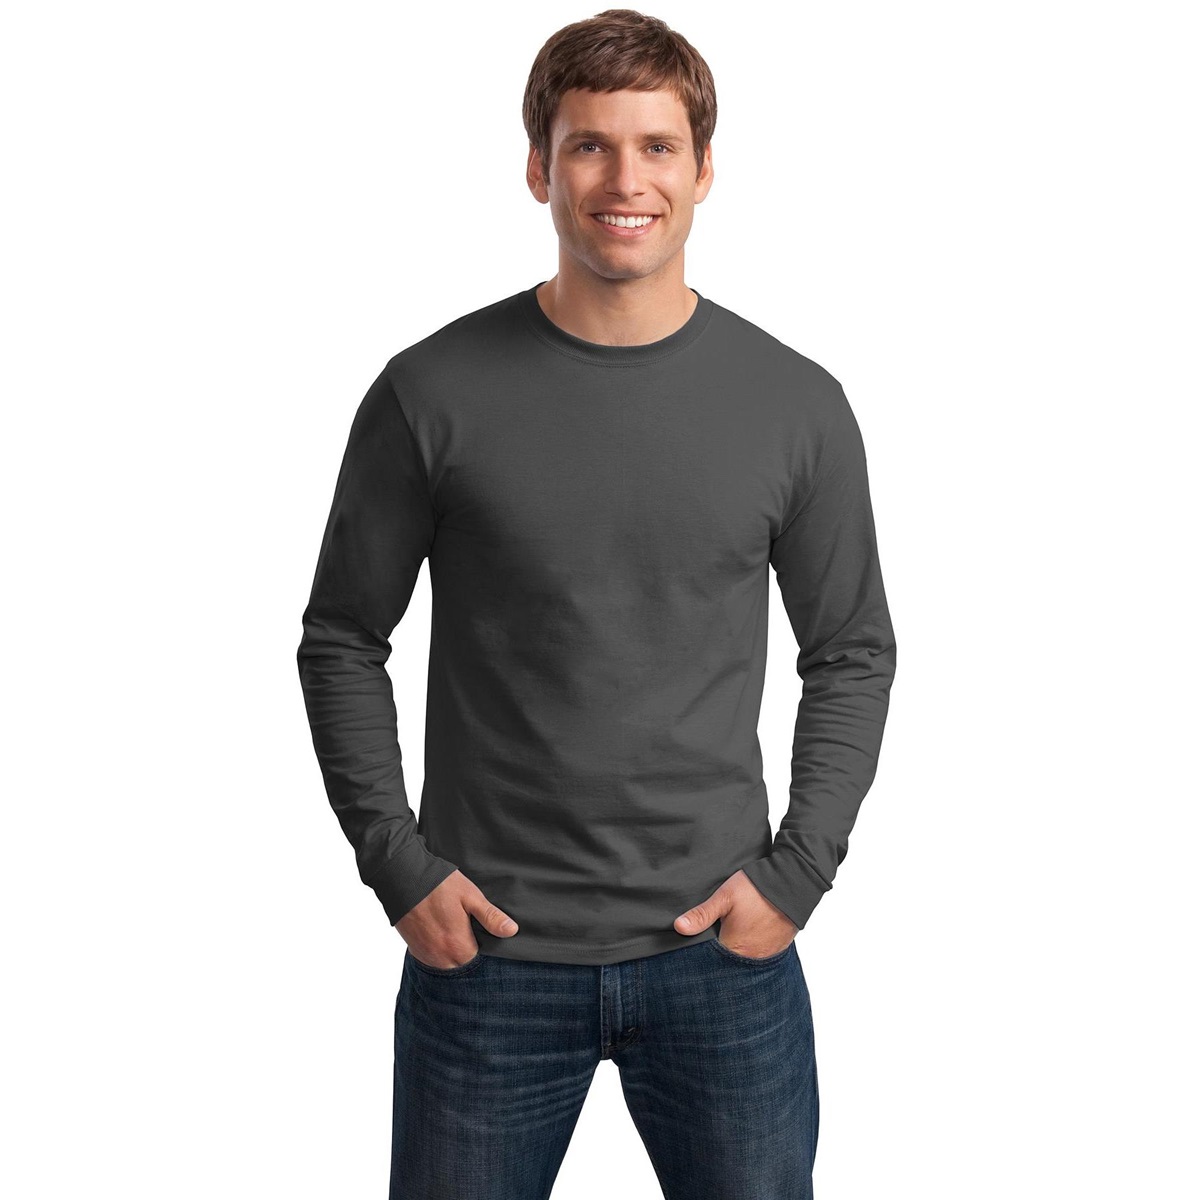 Hanes 5586 Tagless Cotton Long Sleeve T-Shirt - Smoke Grey | FullSource.com